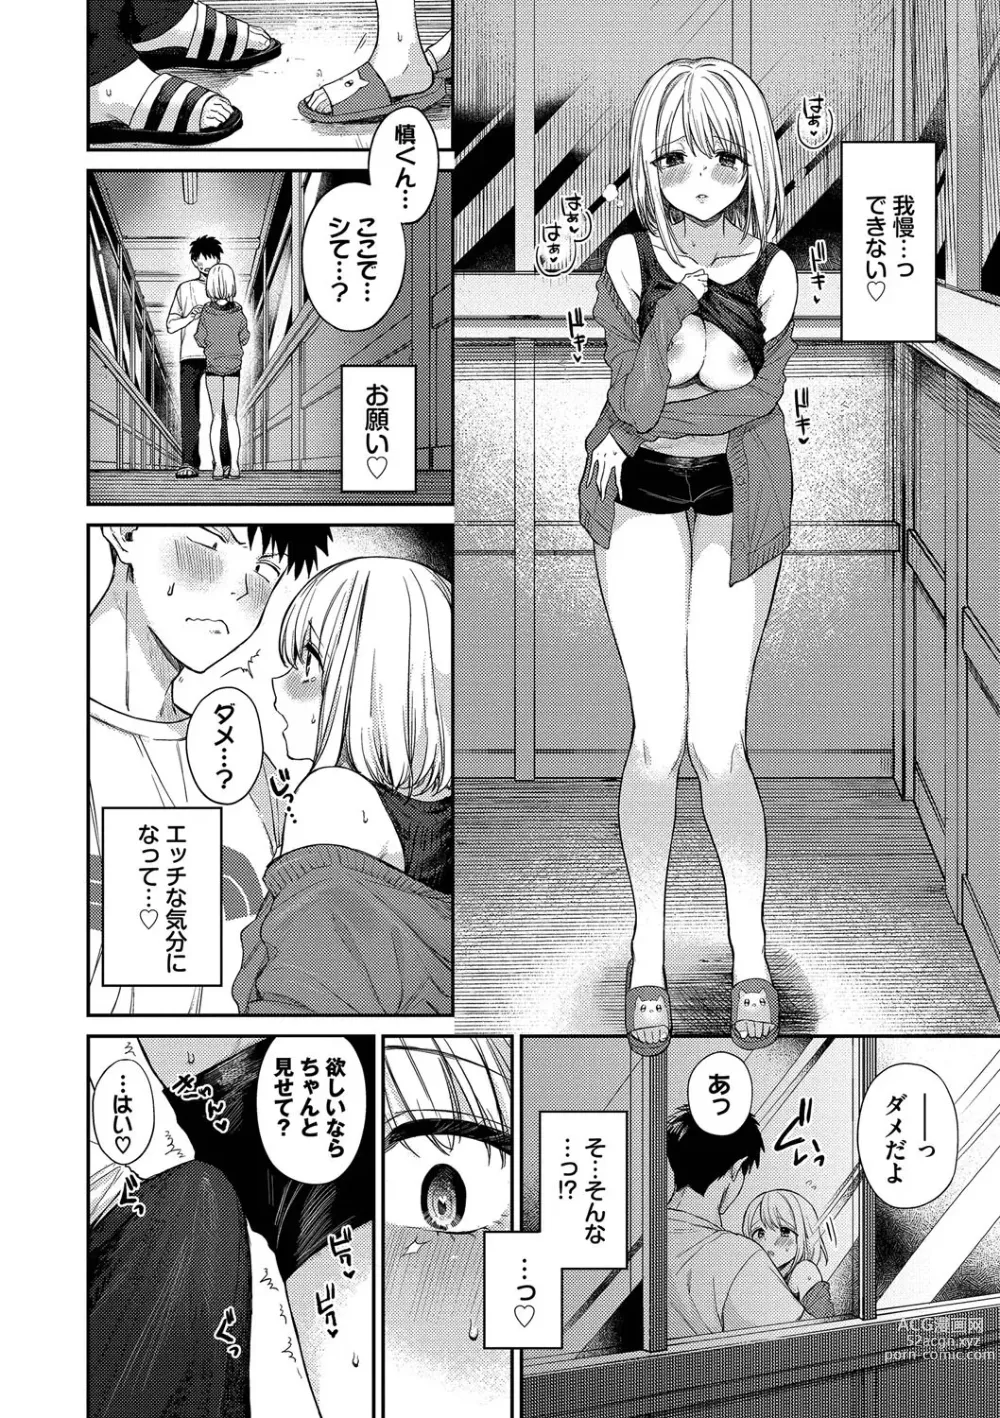 Page 187 of manga Mutsuri Bloom